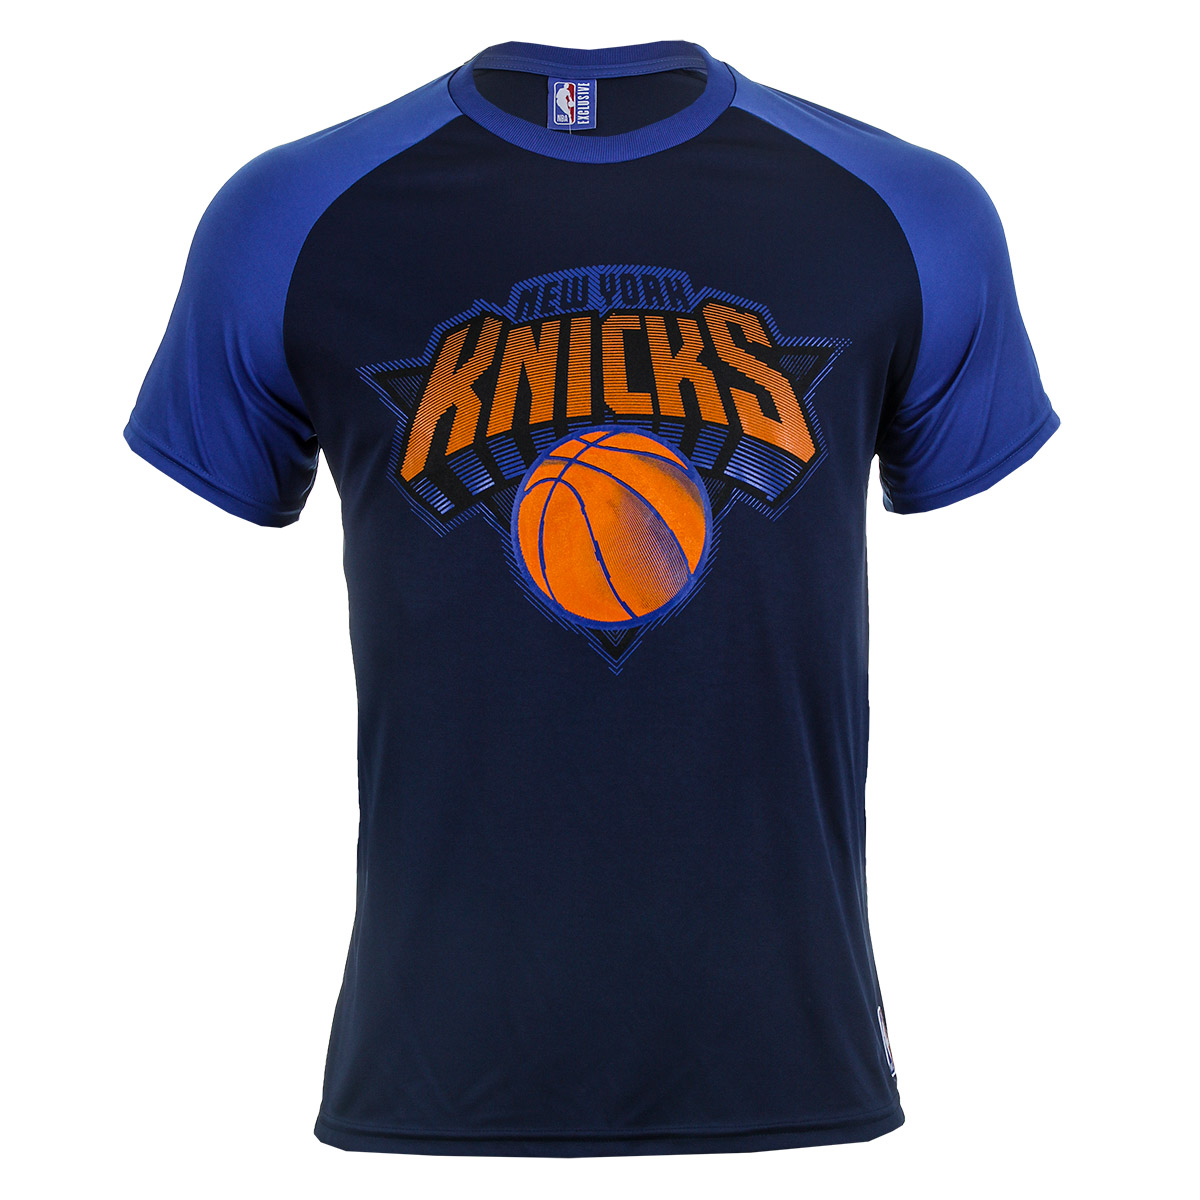 Camiseta Masc. Spr Knicks - Marinho/Royal